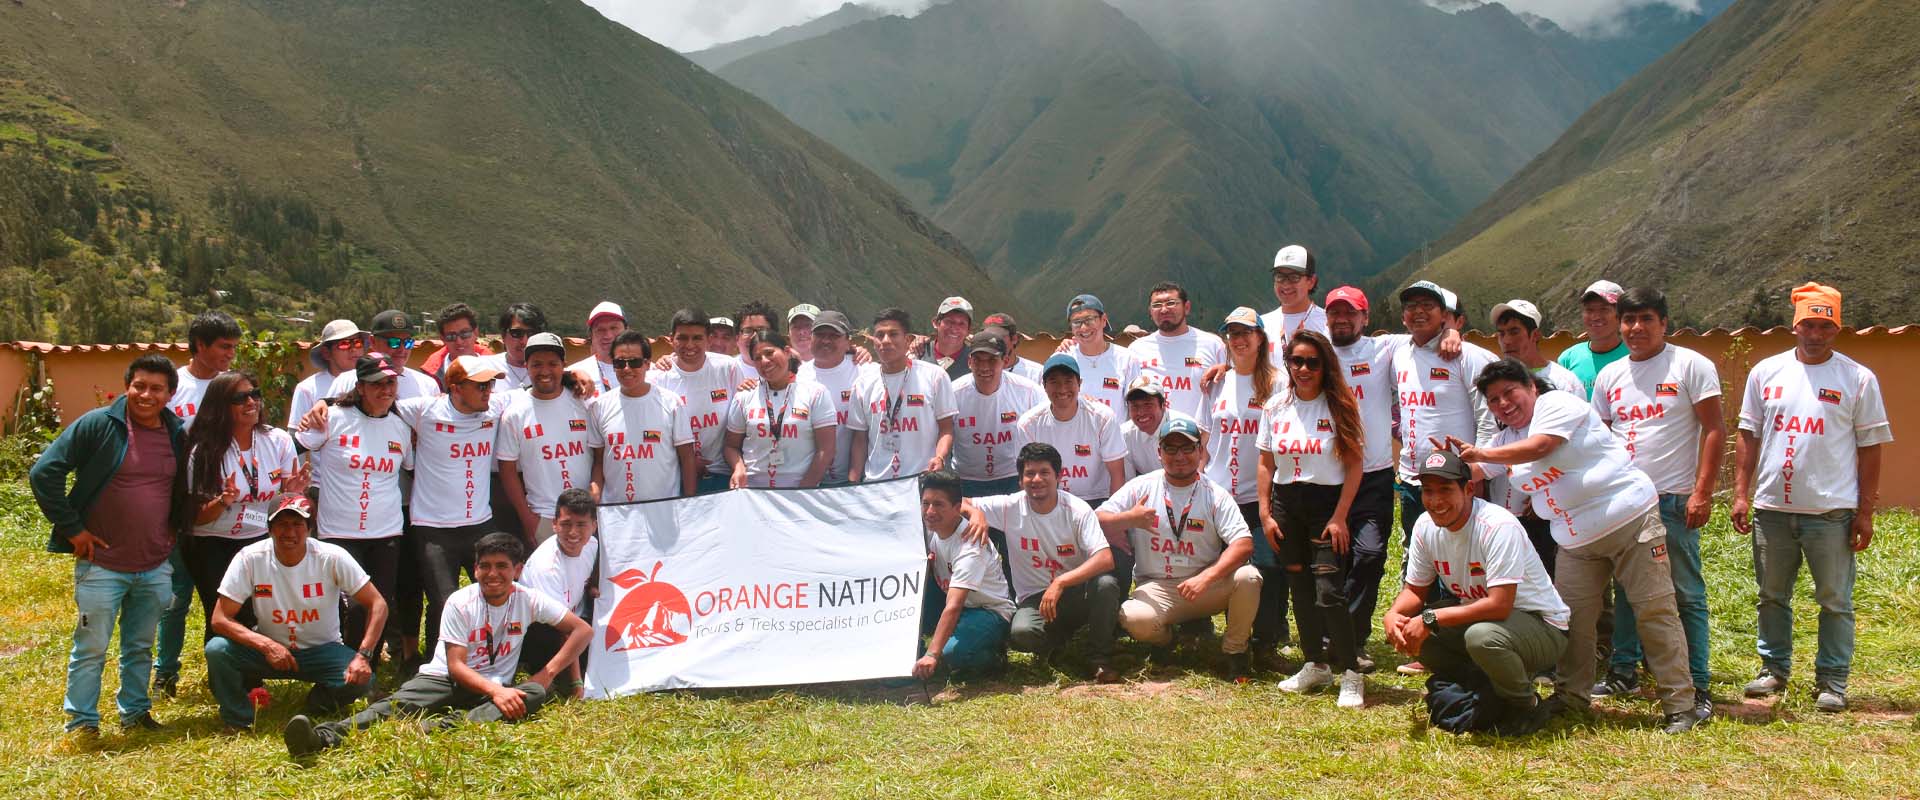 Orange Nation Peru